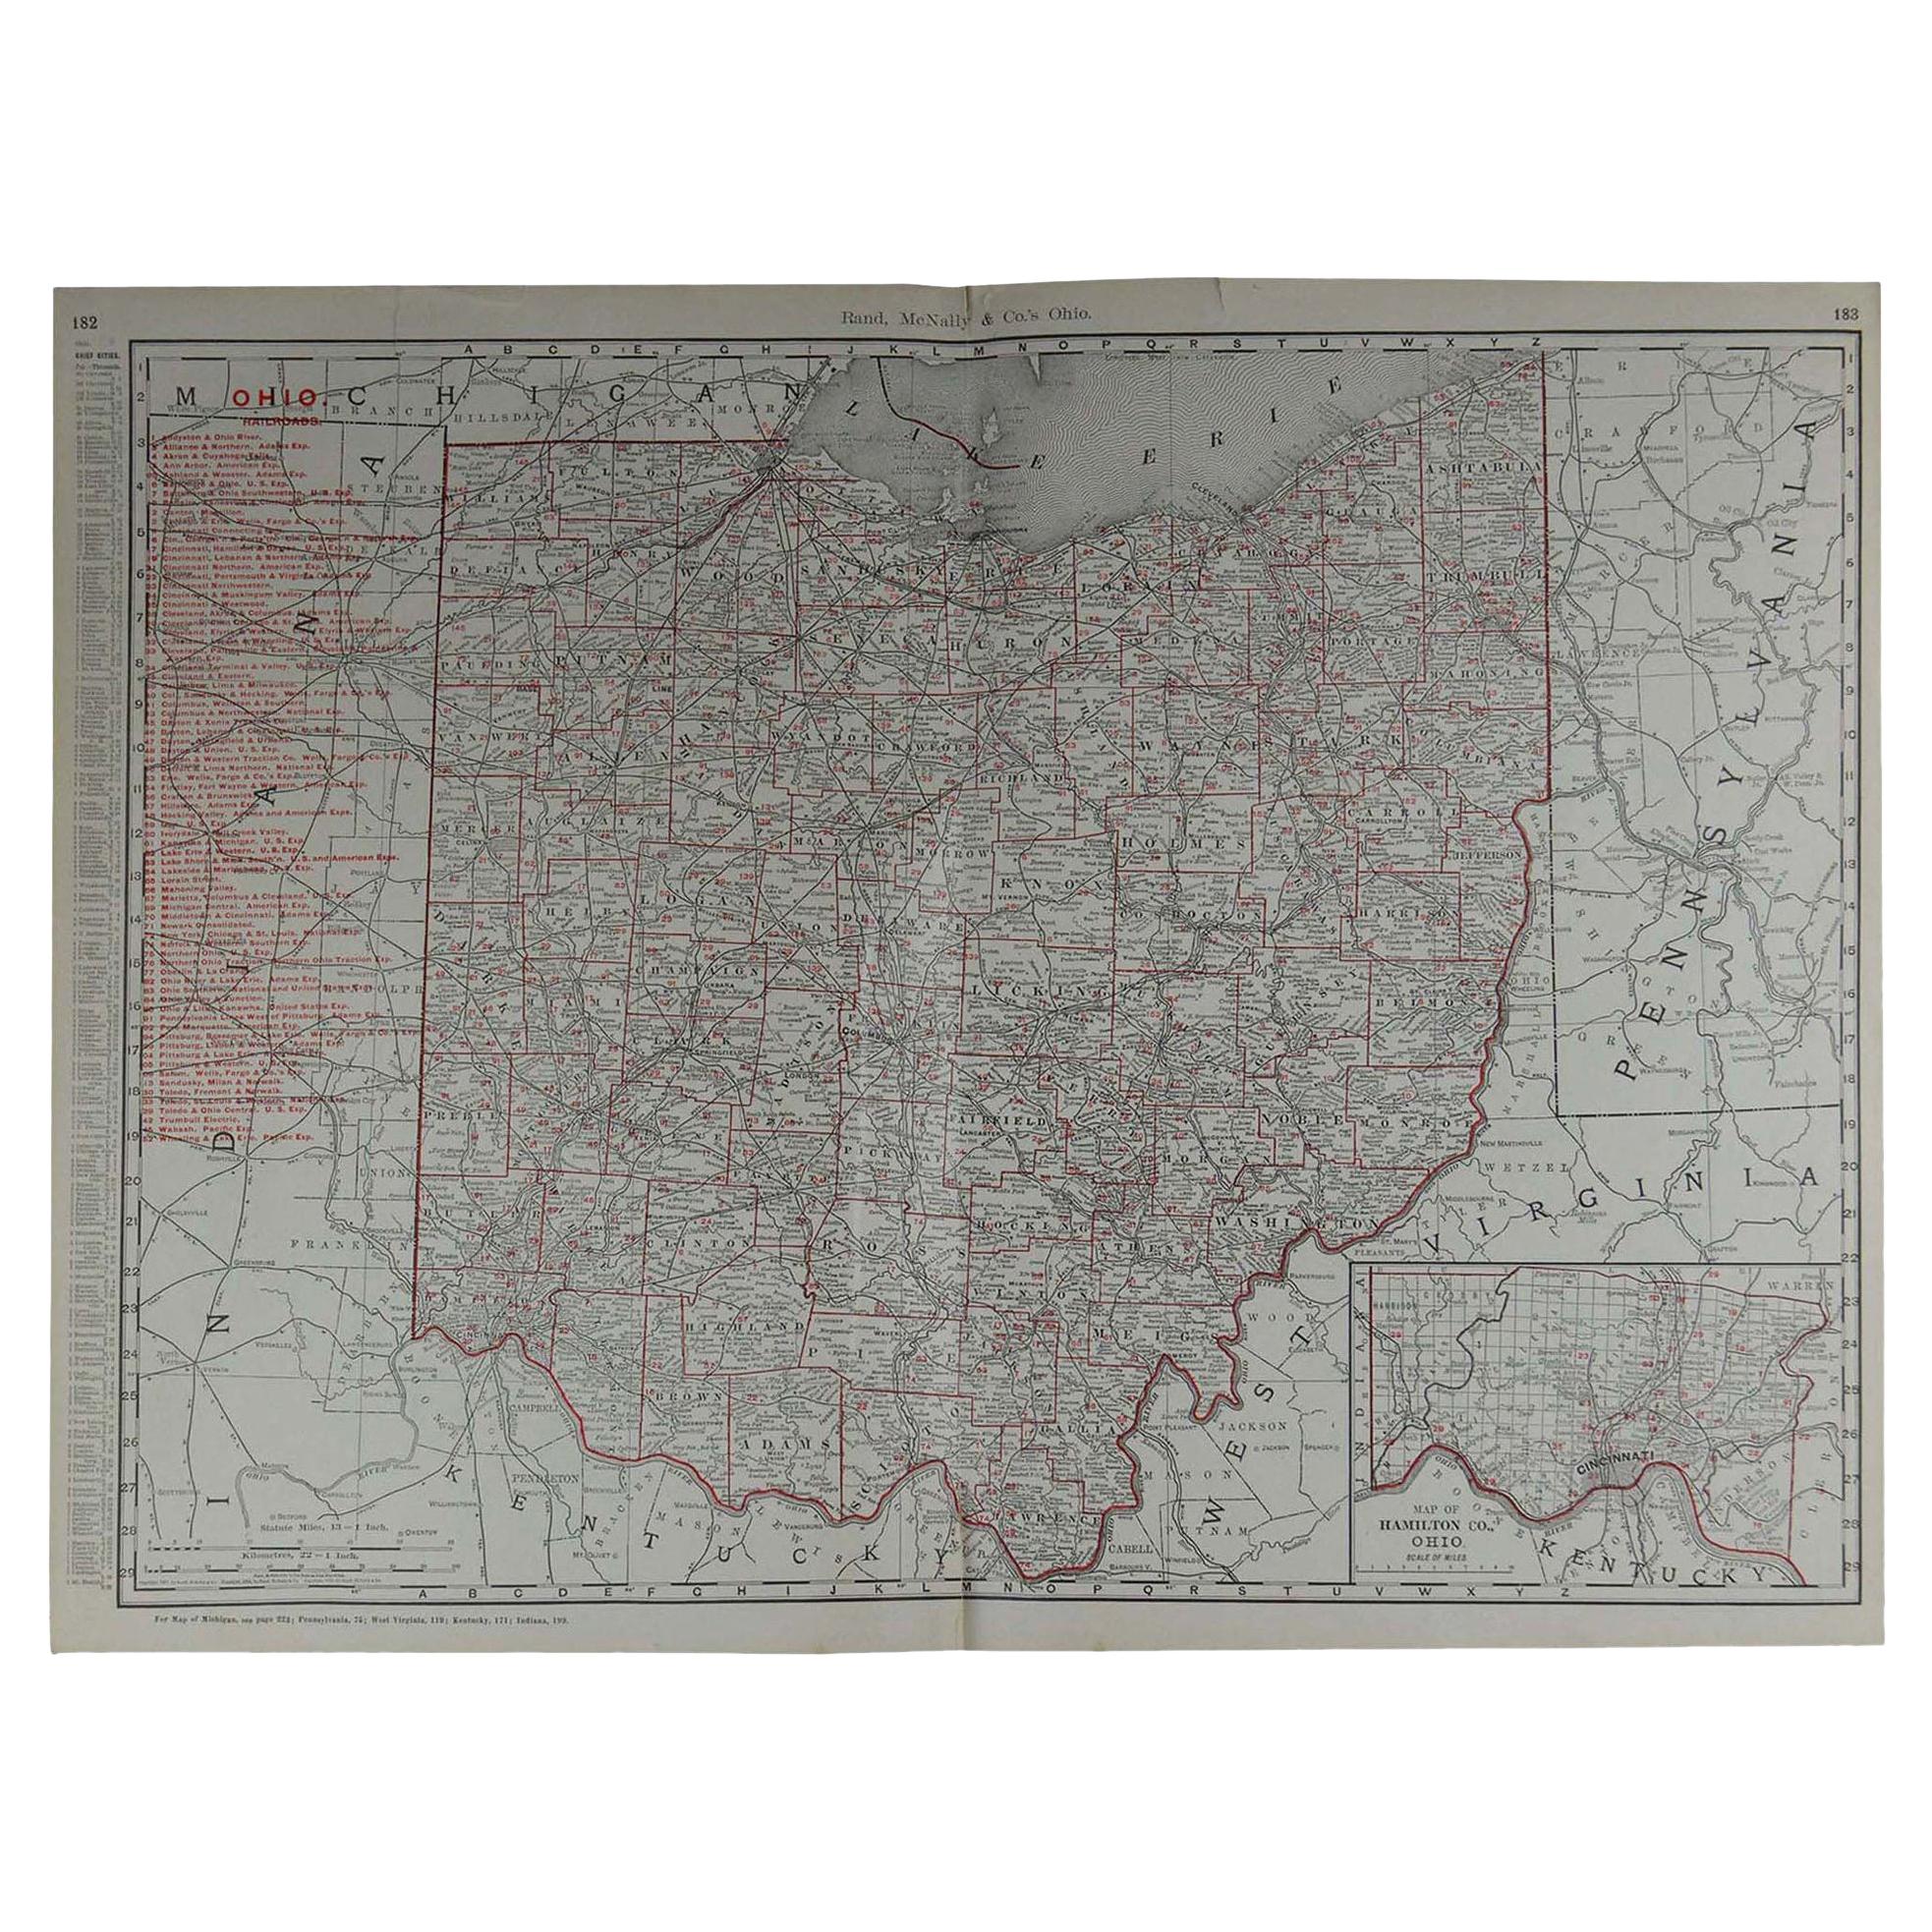 Large Original Antique Map of Ohio by Rand McNally, circa 1900